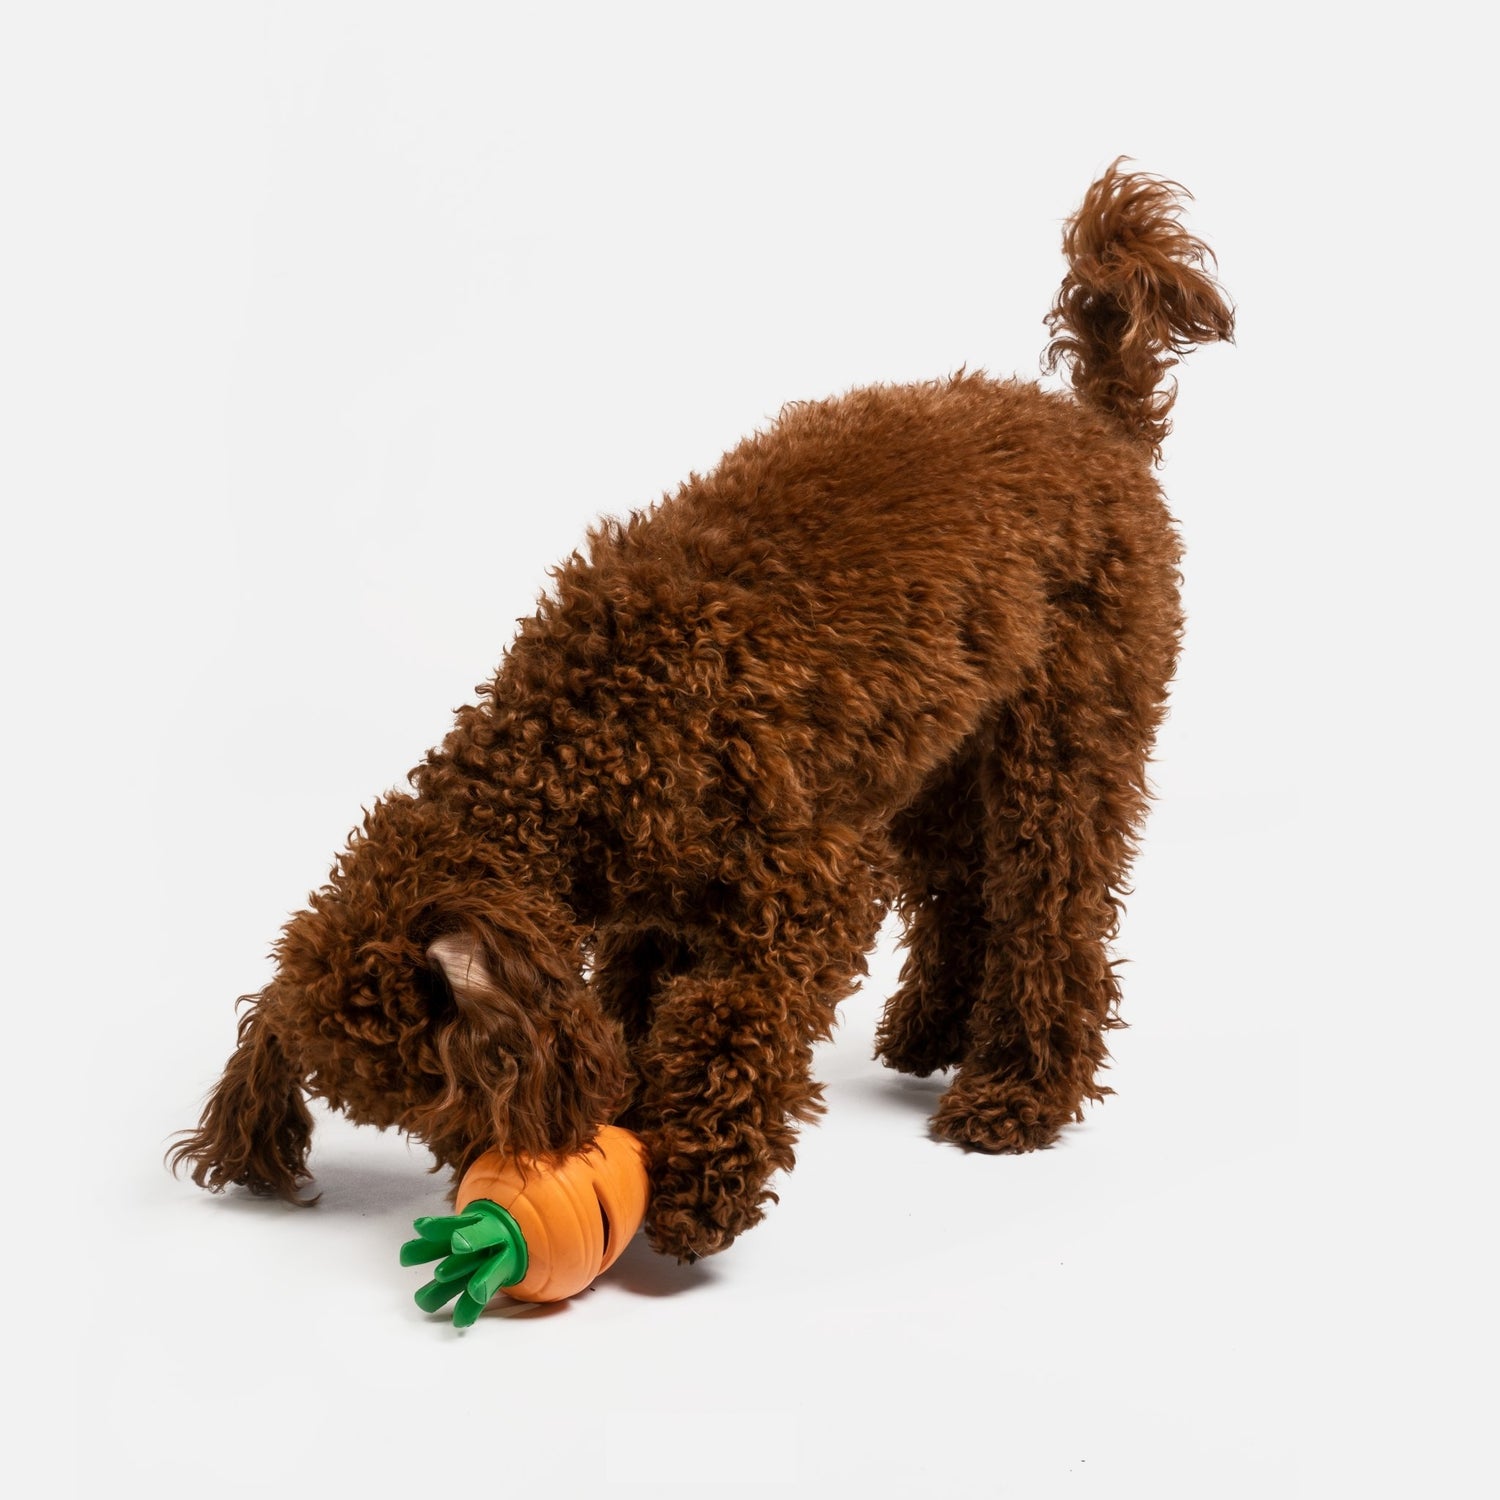 Dover Saddlery® Rope Carrot Dog Toy